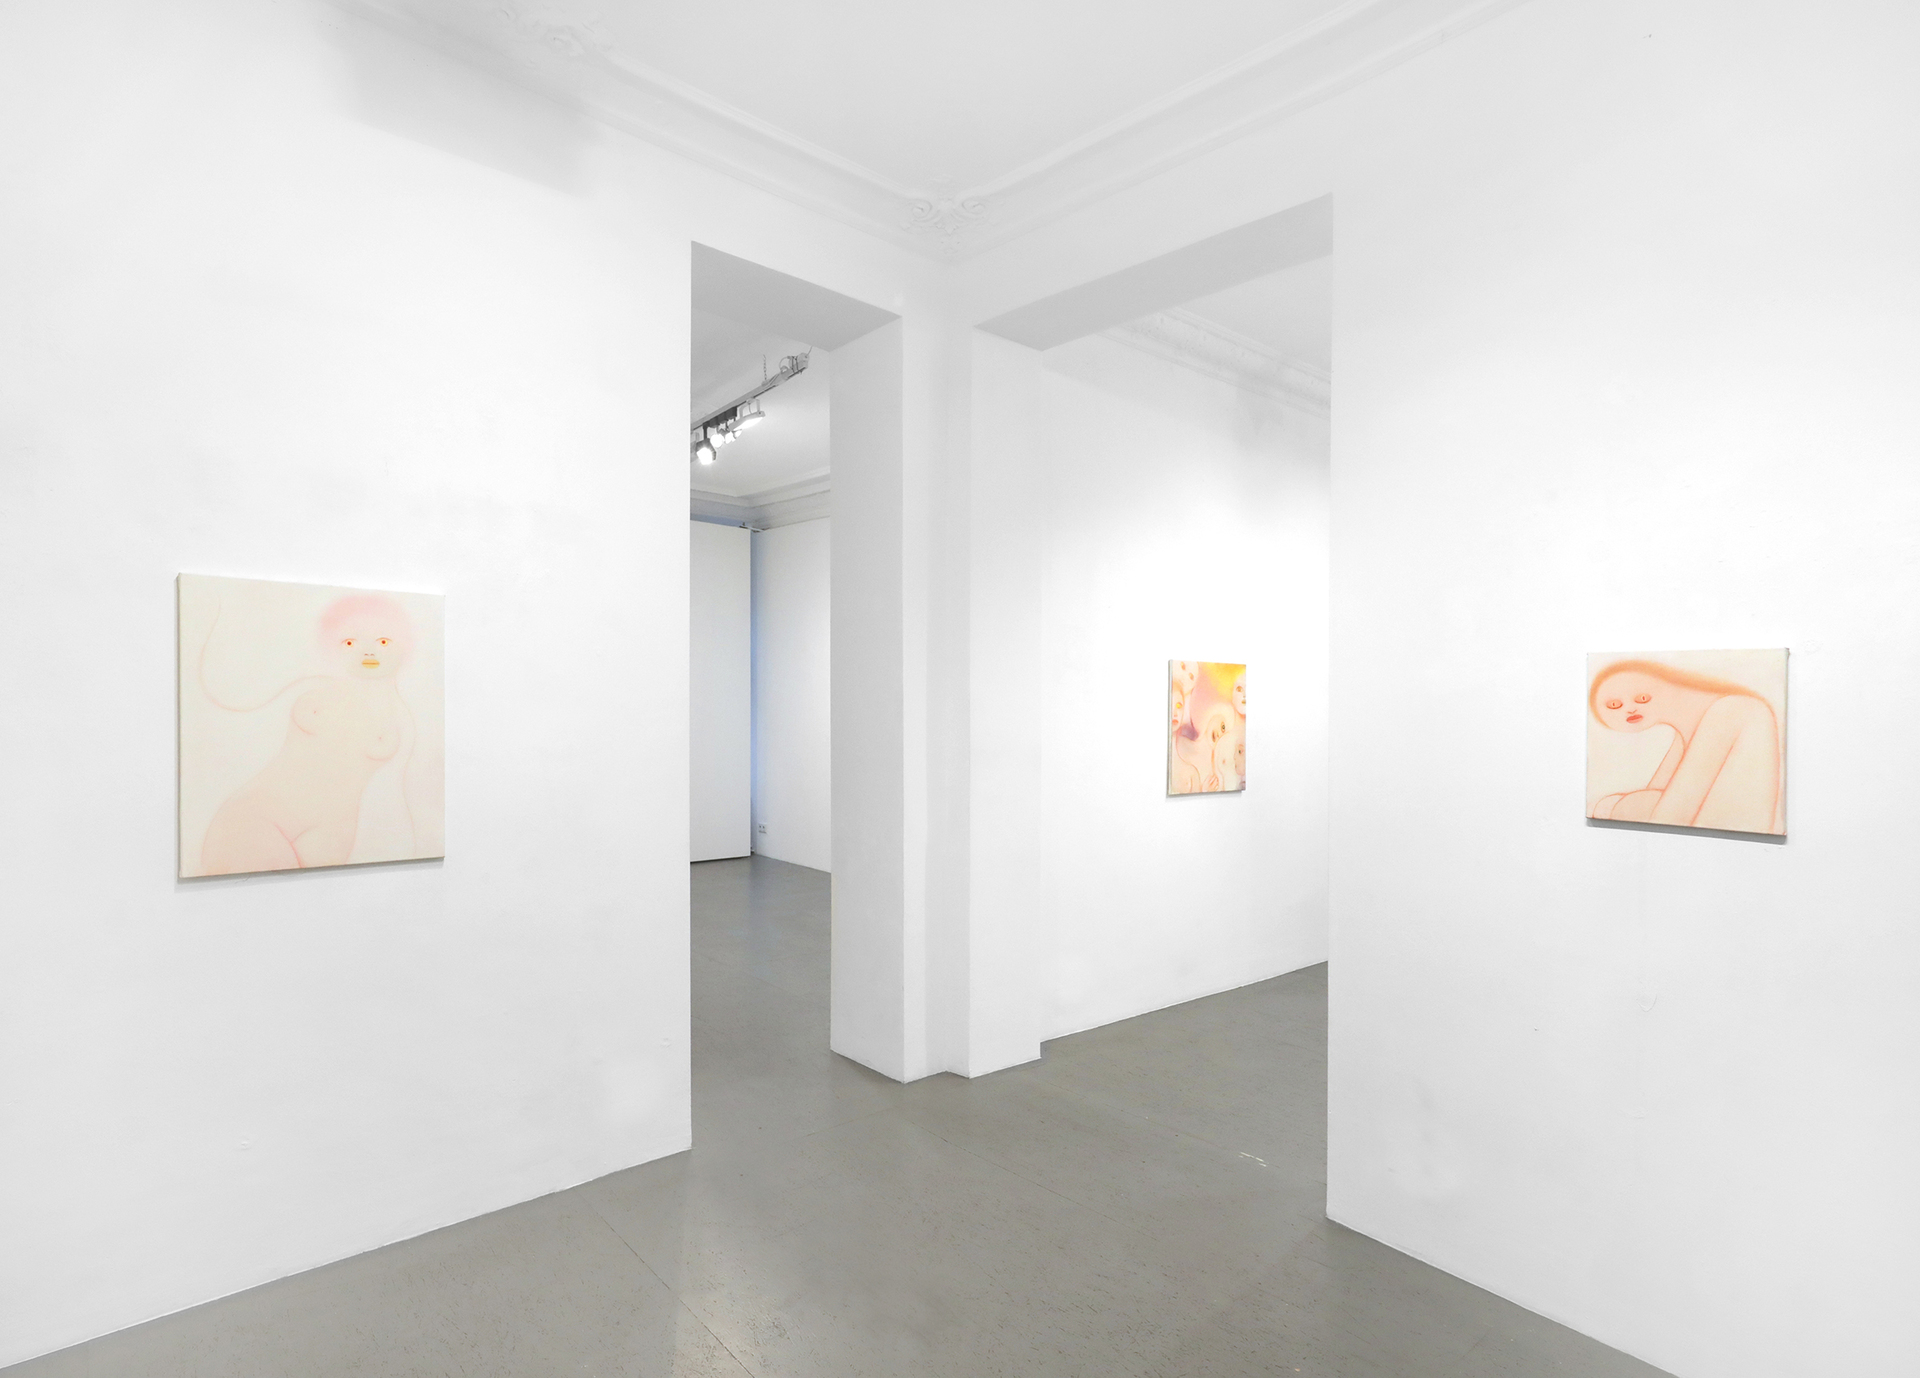 Installation view, Mari Sunna, Passed, 2020 at galerie burster berlin